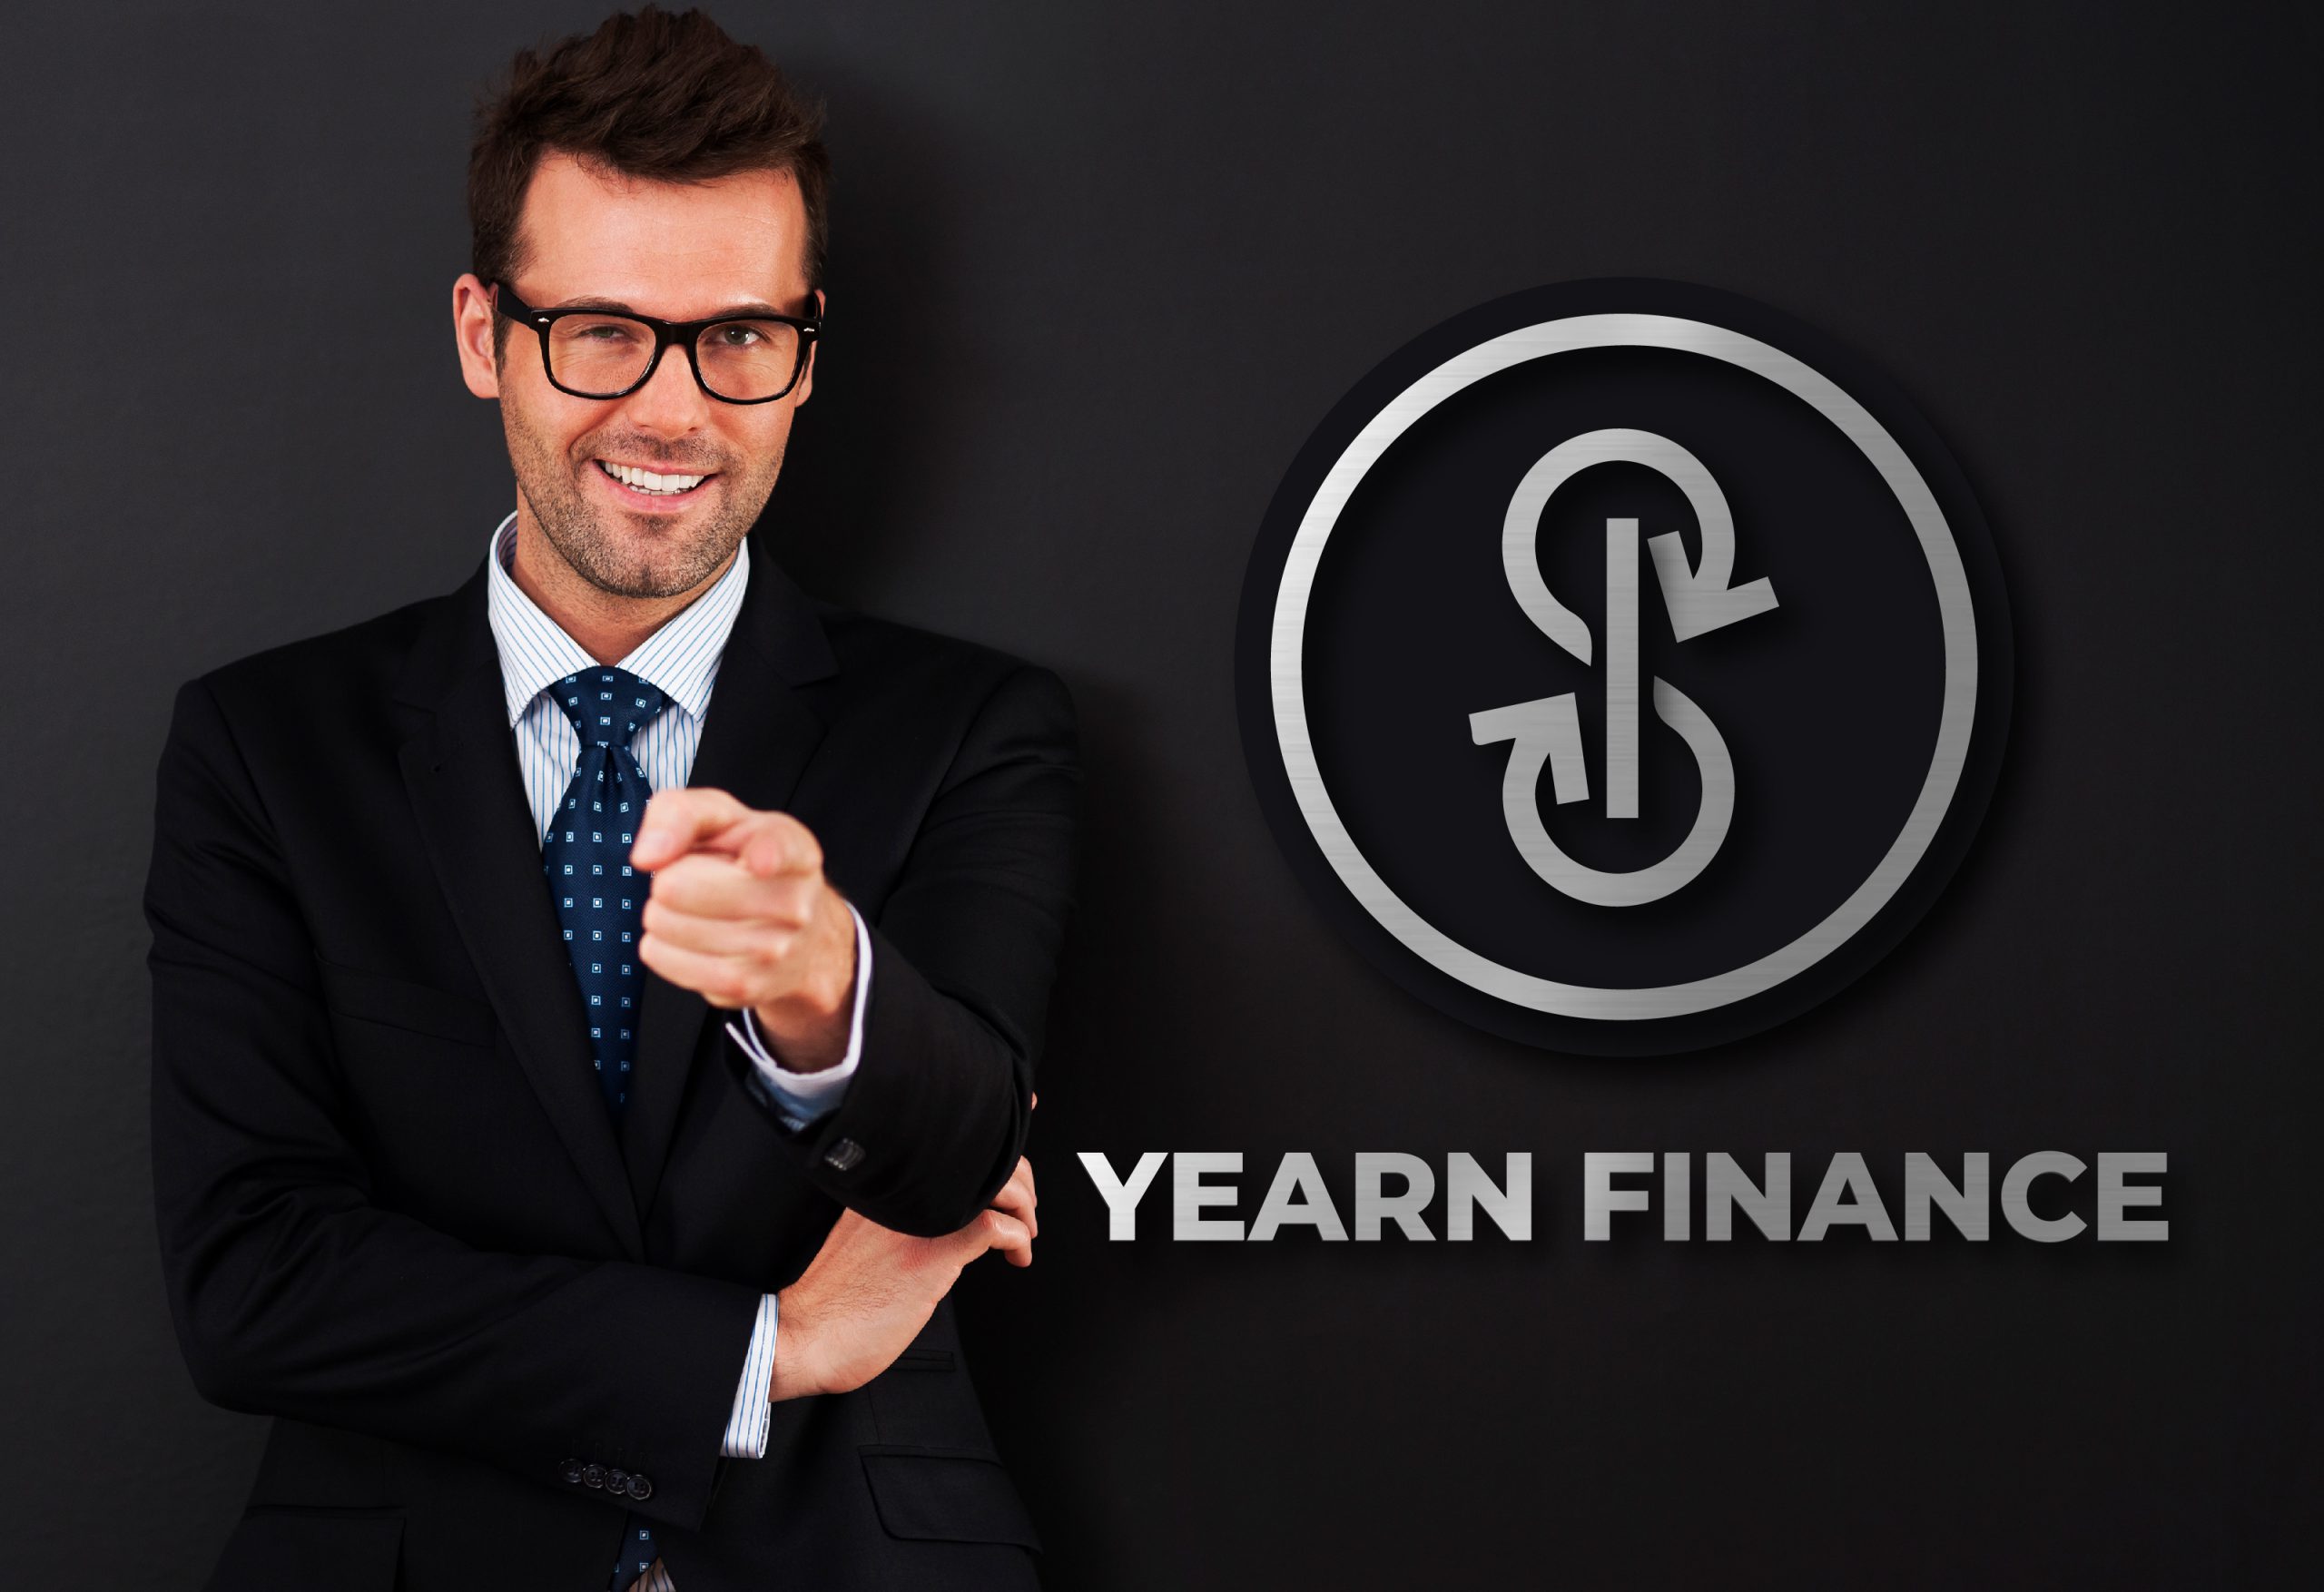 What is Yearn Finance (YFI)